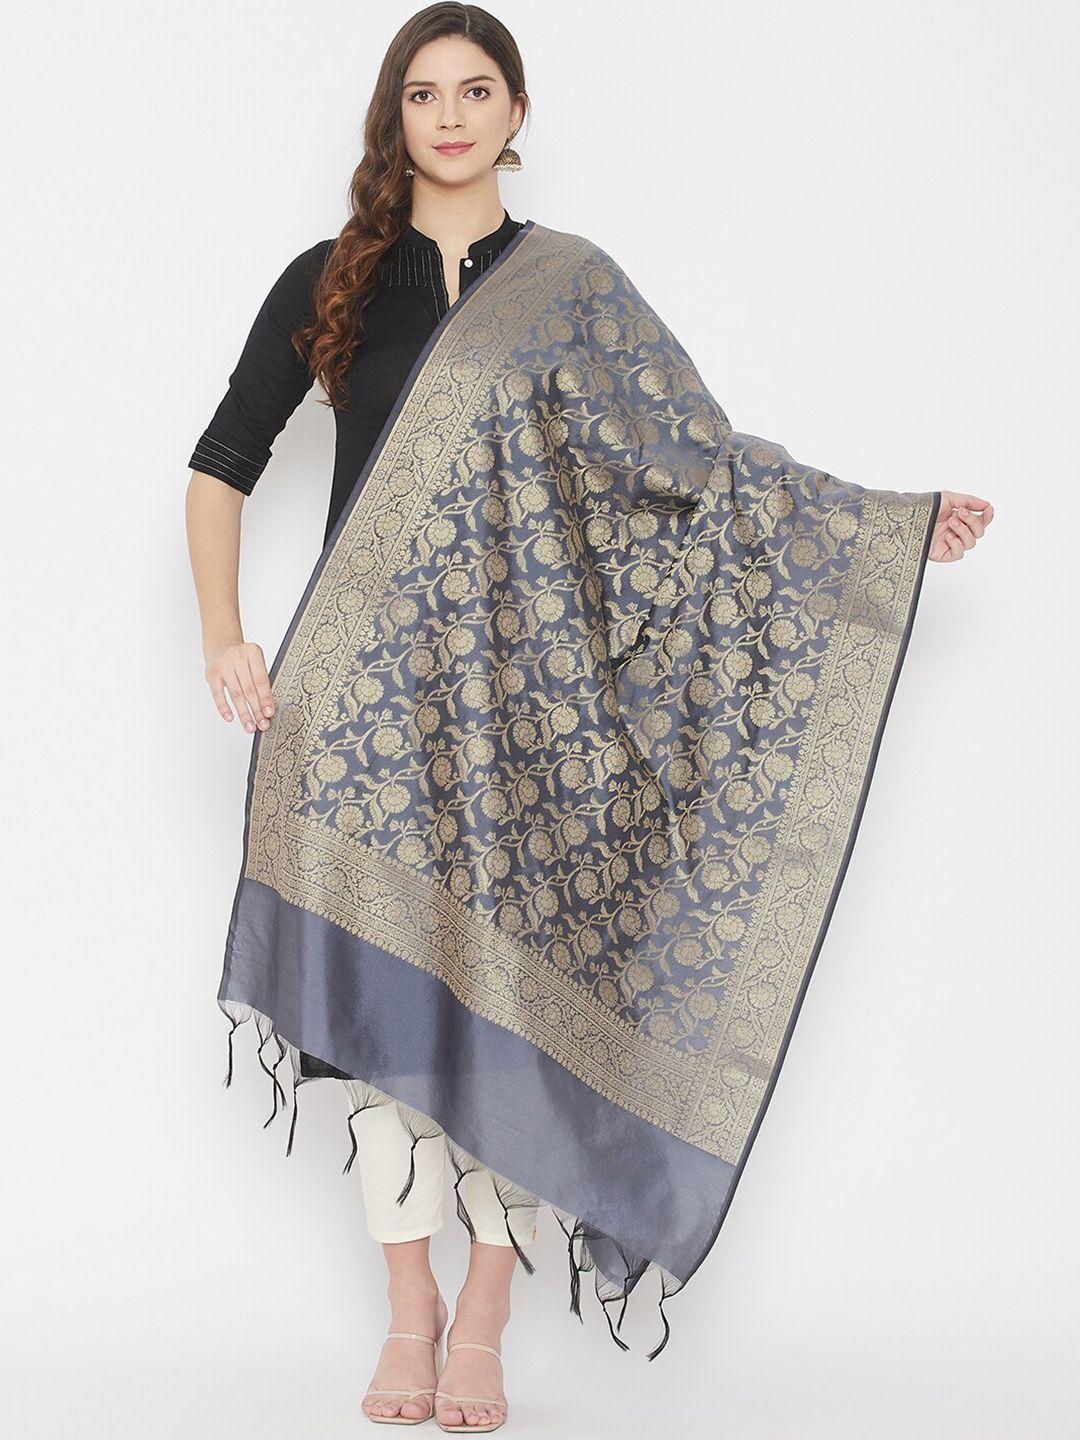 clora creation woven design dupatta with zari